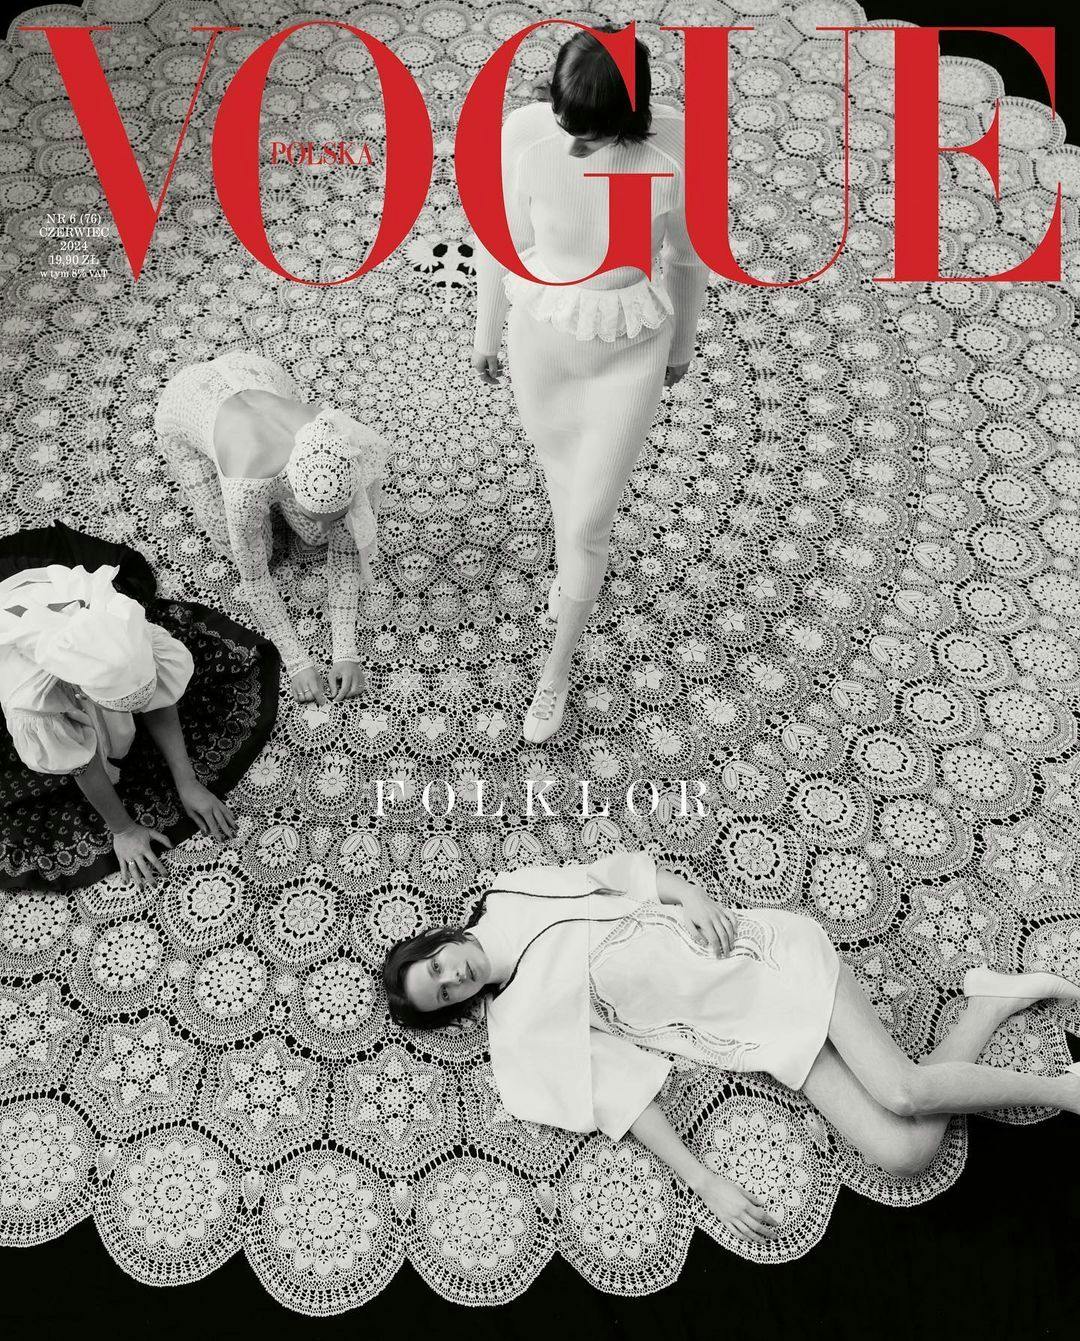 Vogue Polska by Fanny Latour-Lambert & Kasia Mioduska